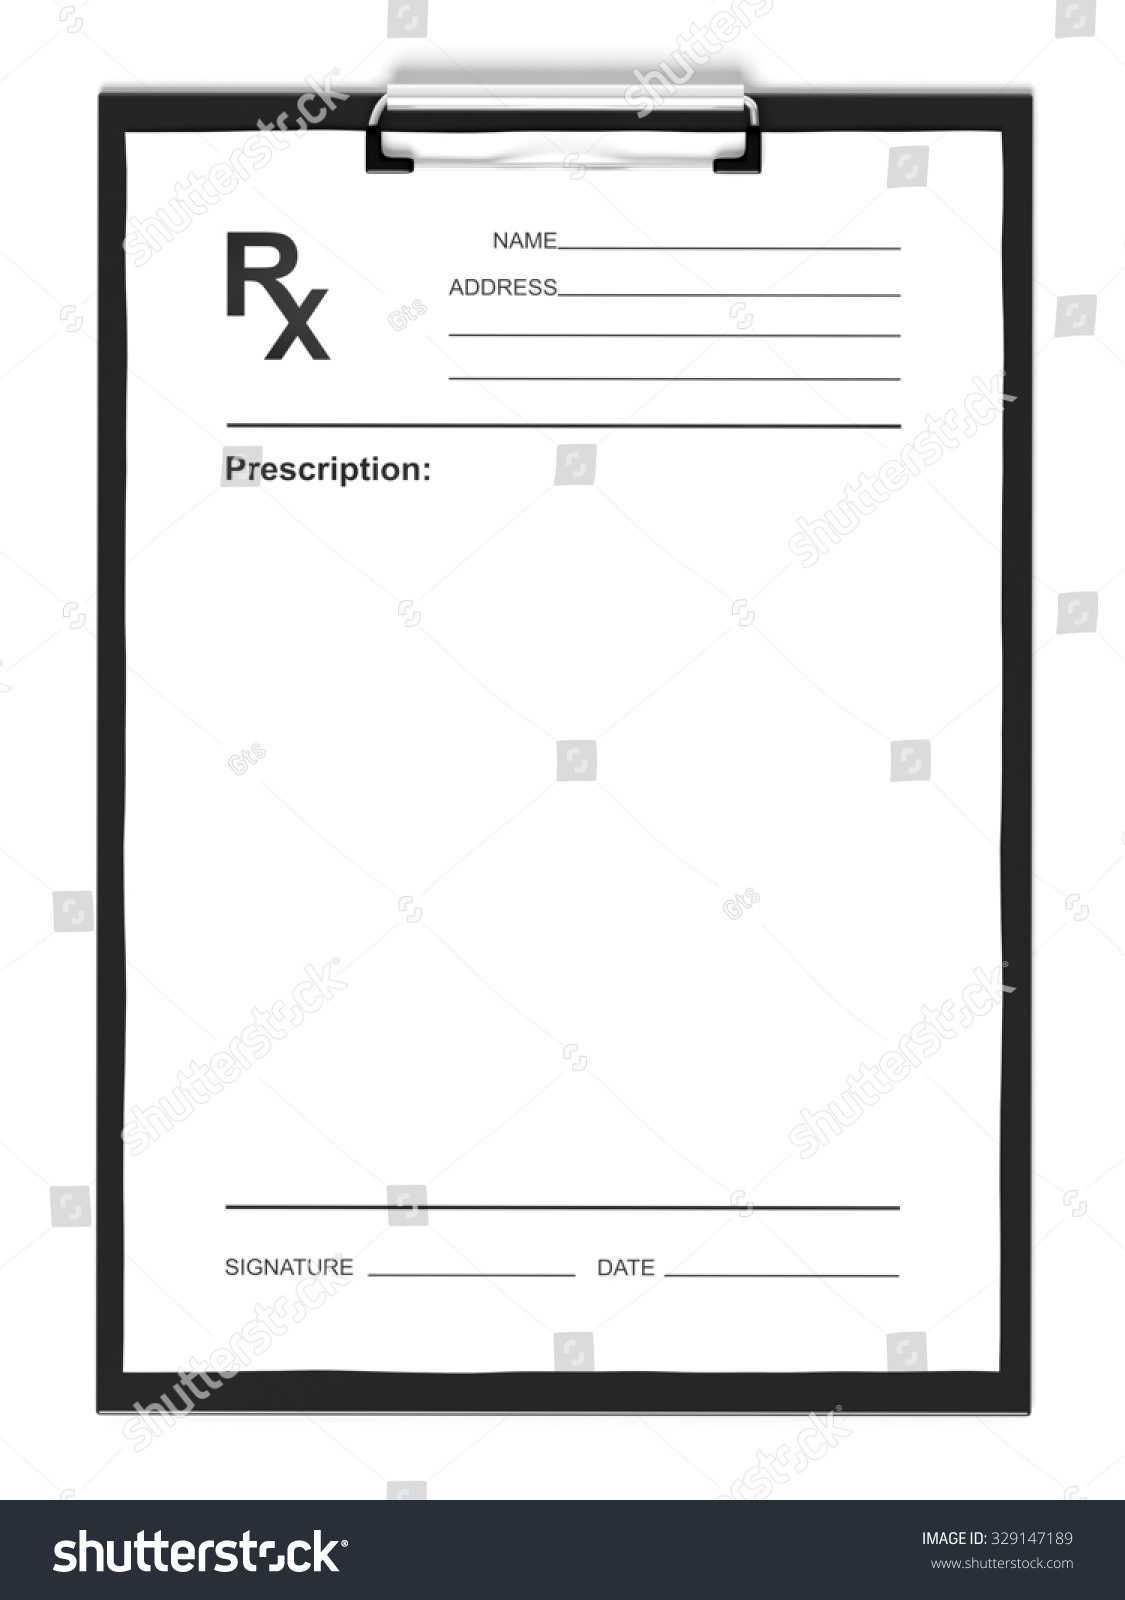 26 Images Of Blank Prescription Form Doctor Template Intended For Blank Prescription Pad Template